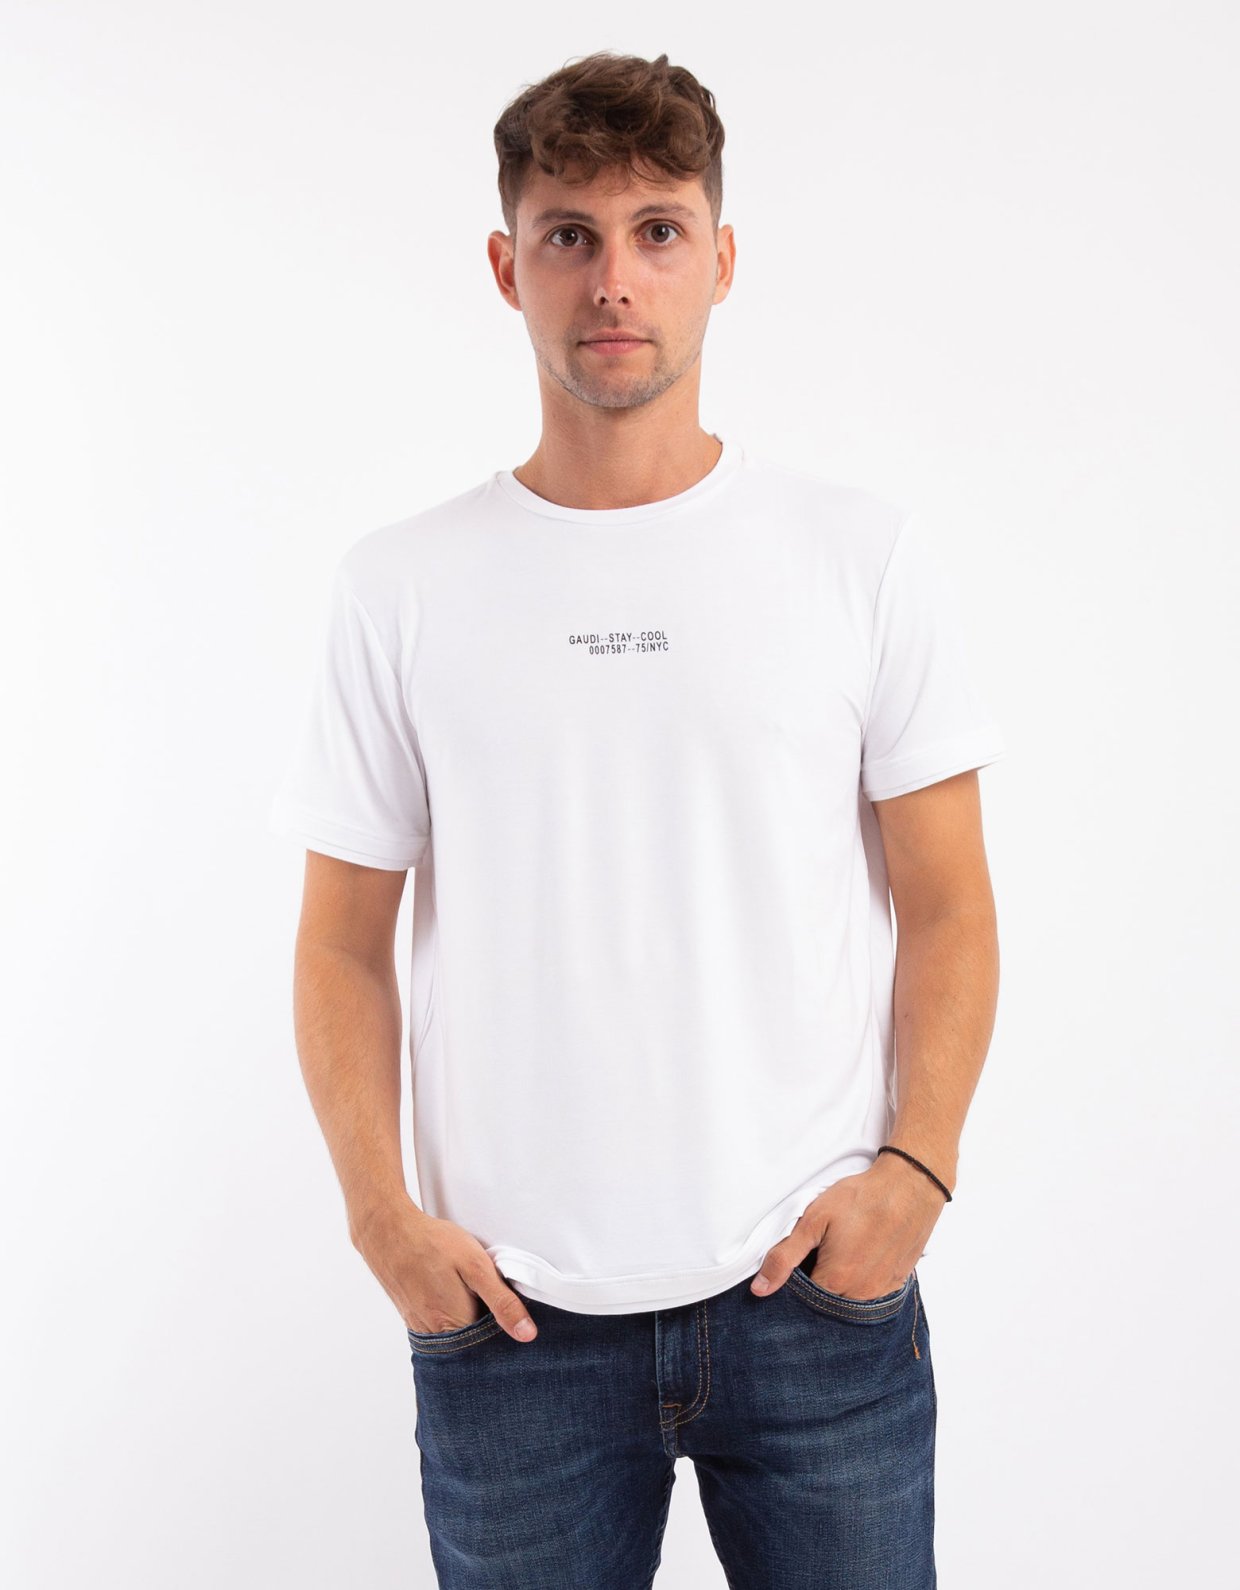 Gaudi Stay cool t-shirt white